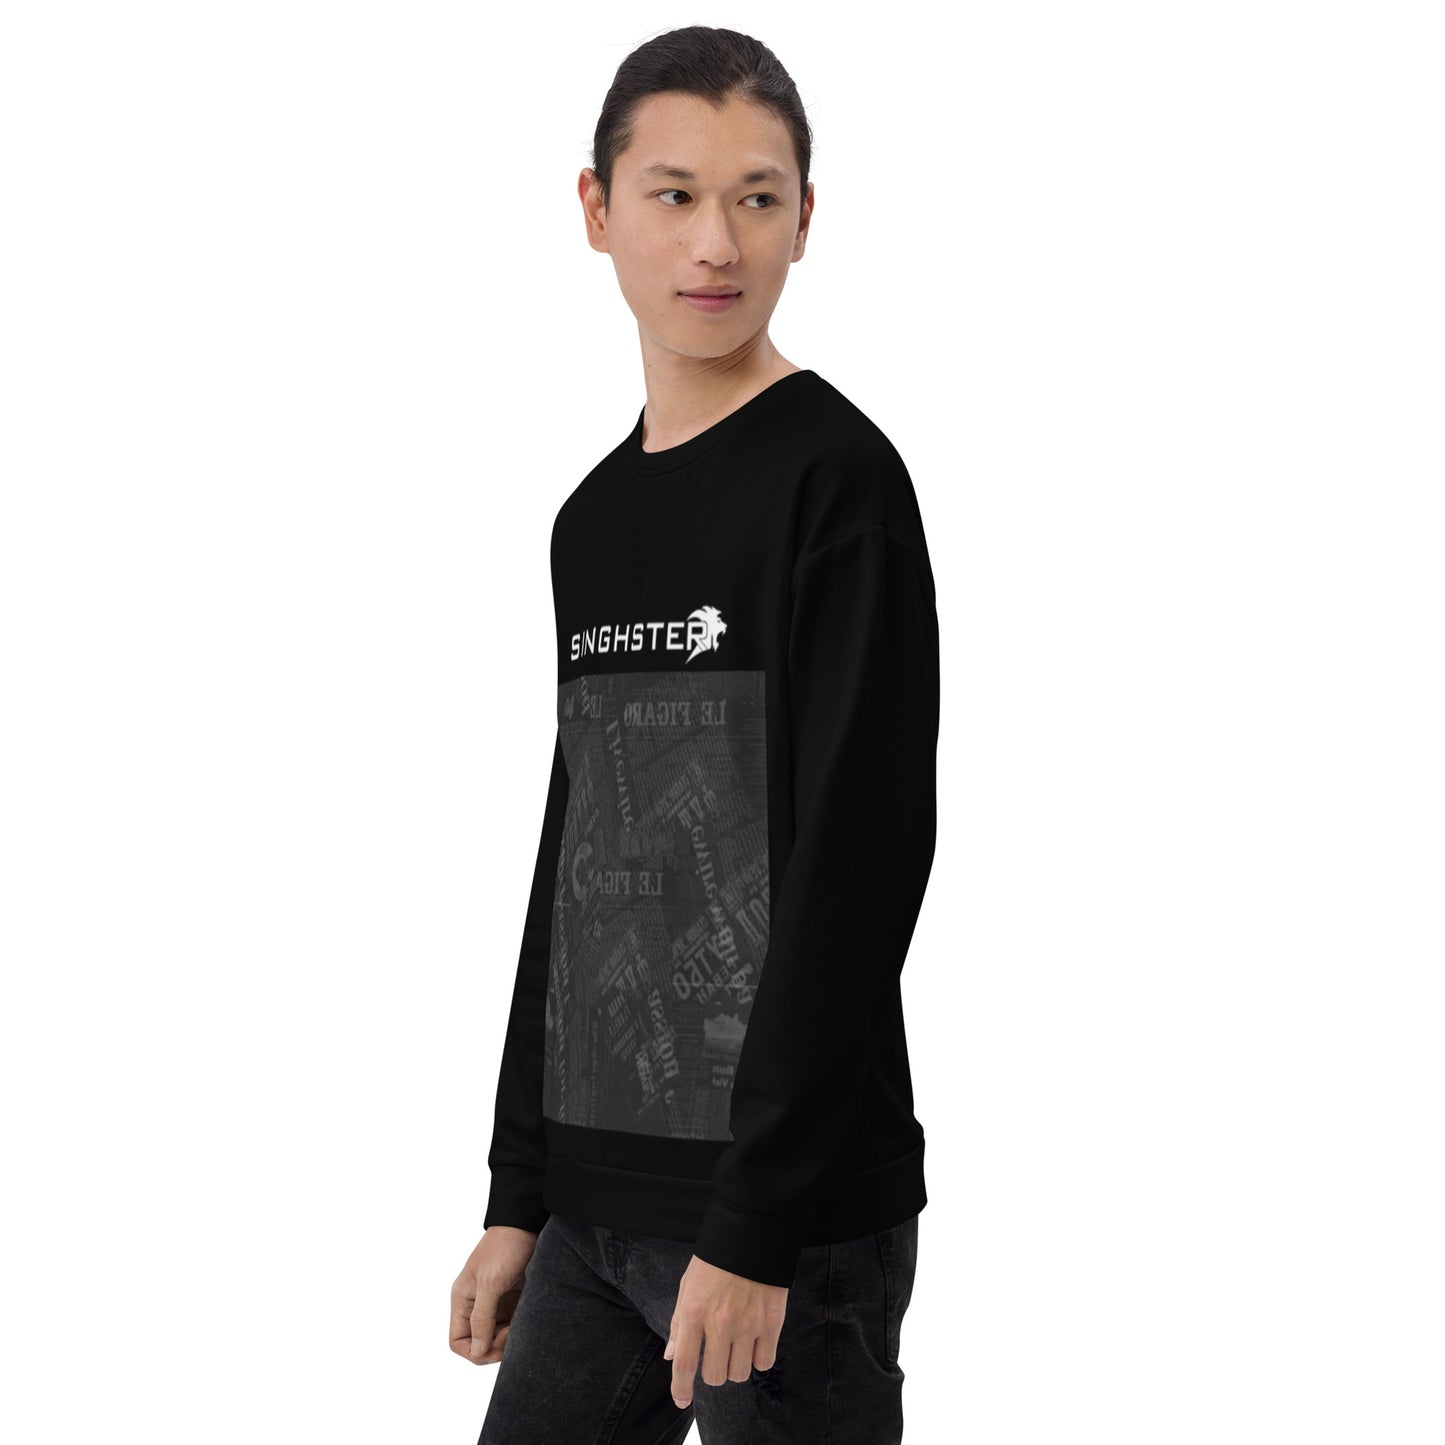 Hellomart Black Sweatshirt